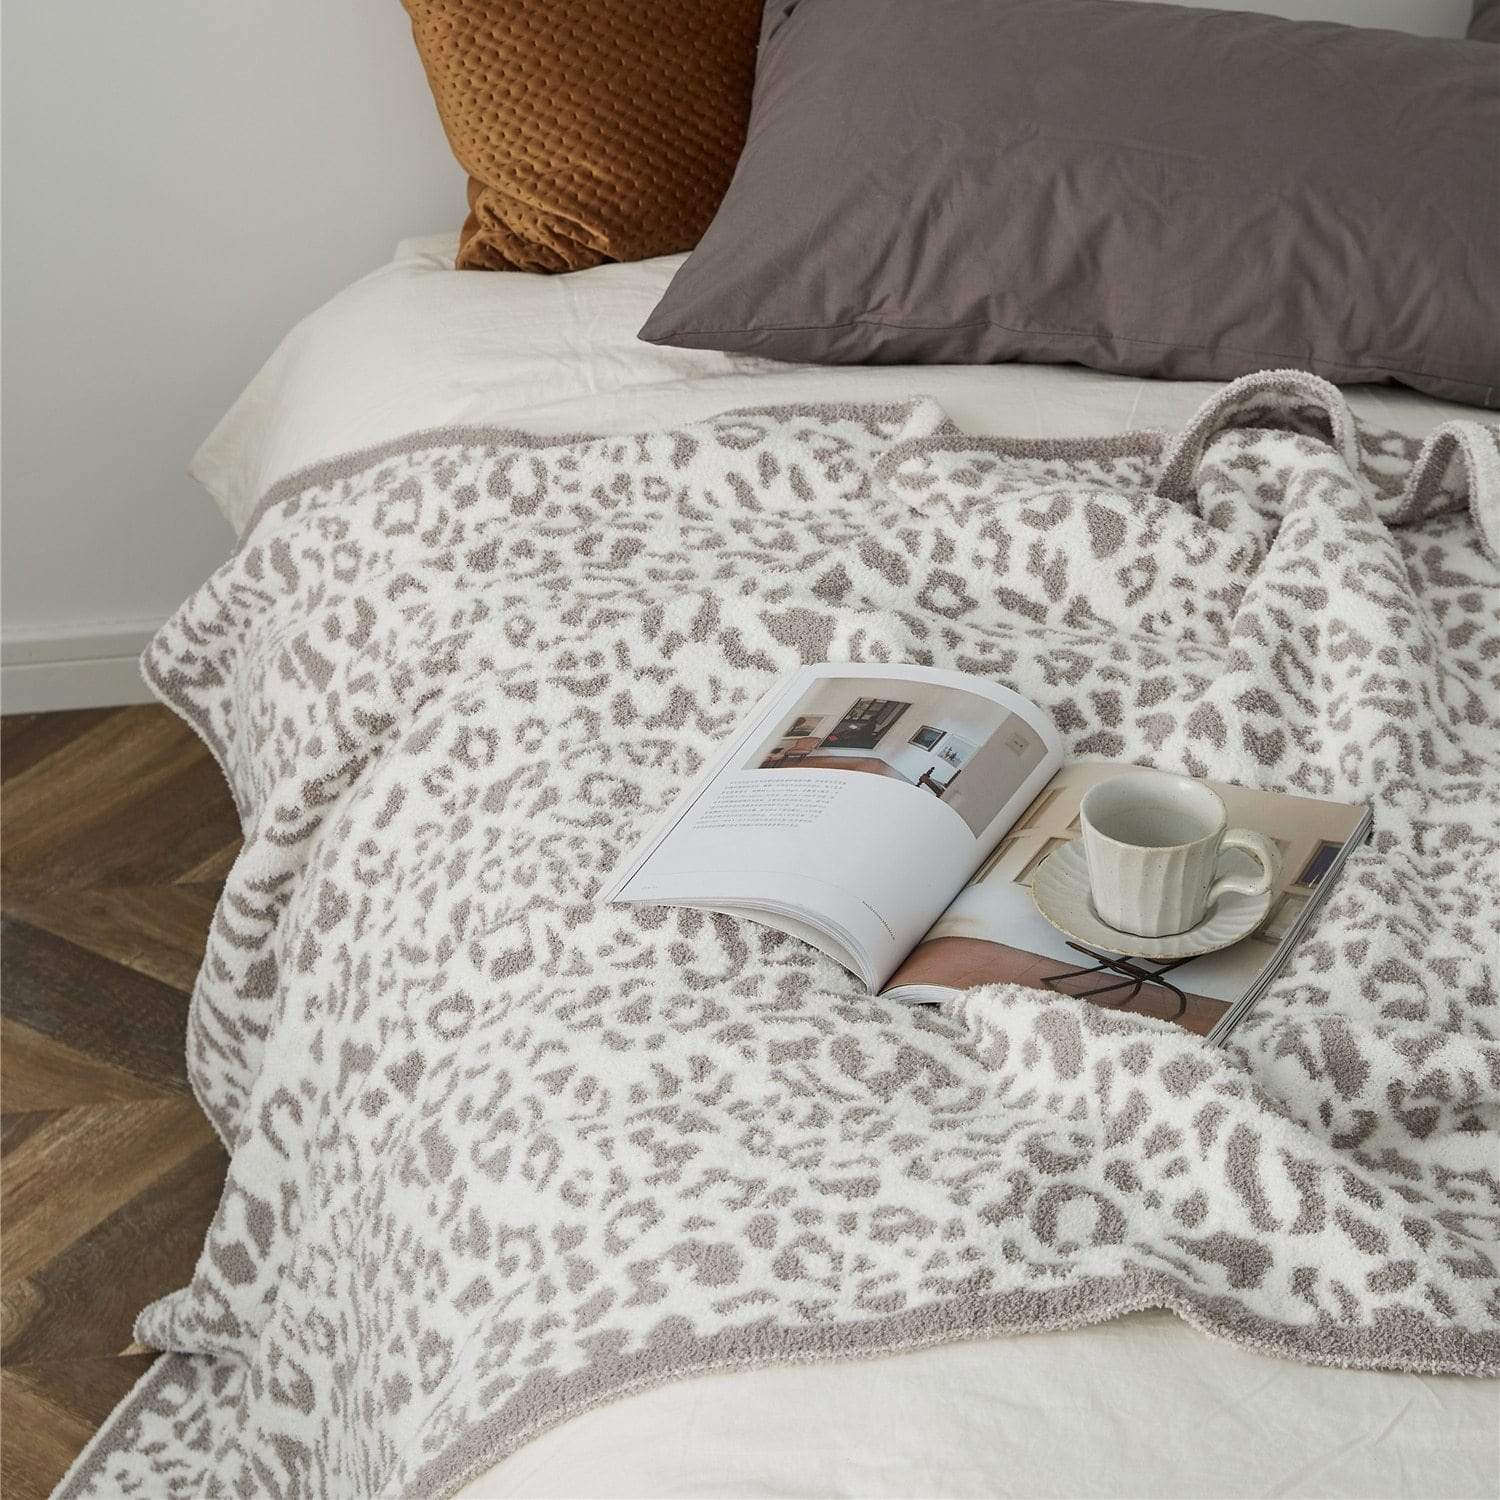 Leopard Print Throw Blankets Blackbrdstore